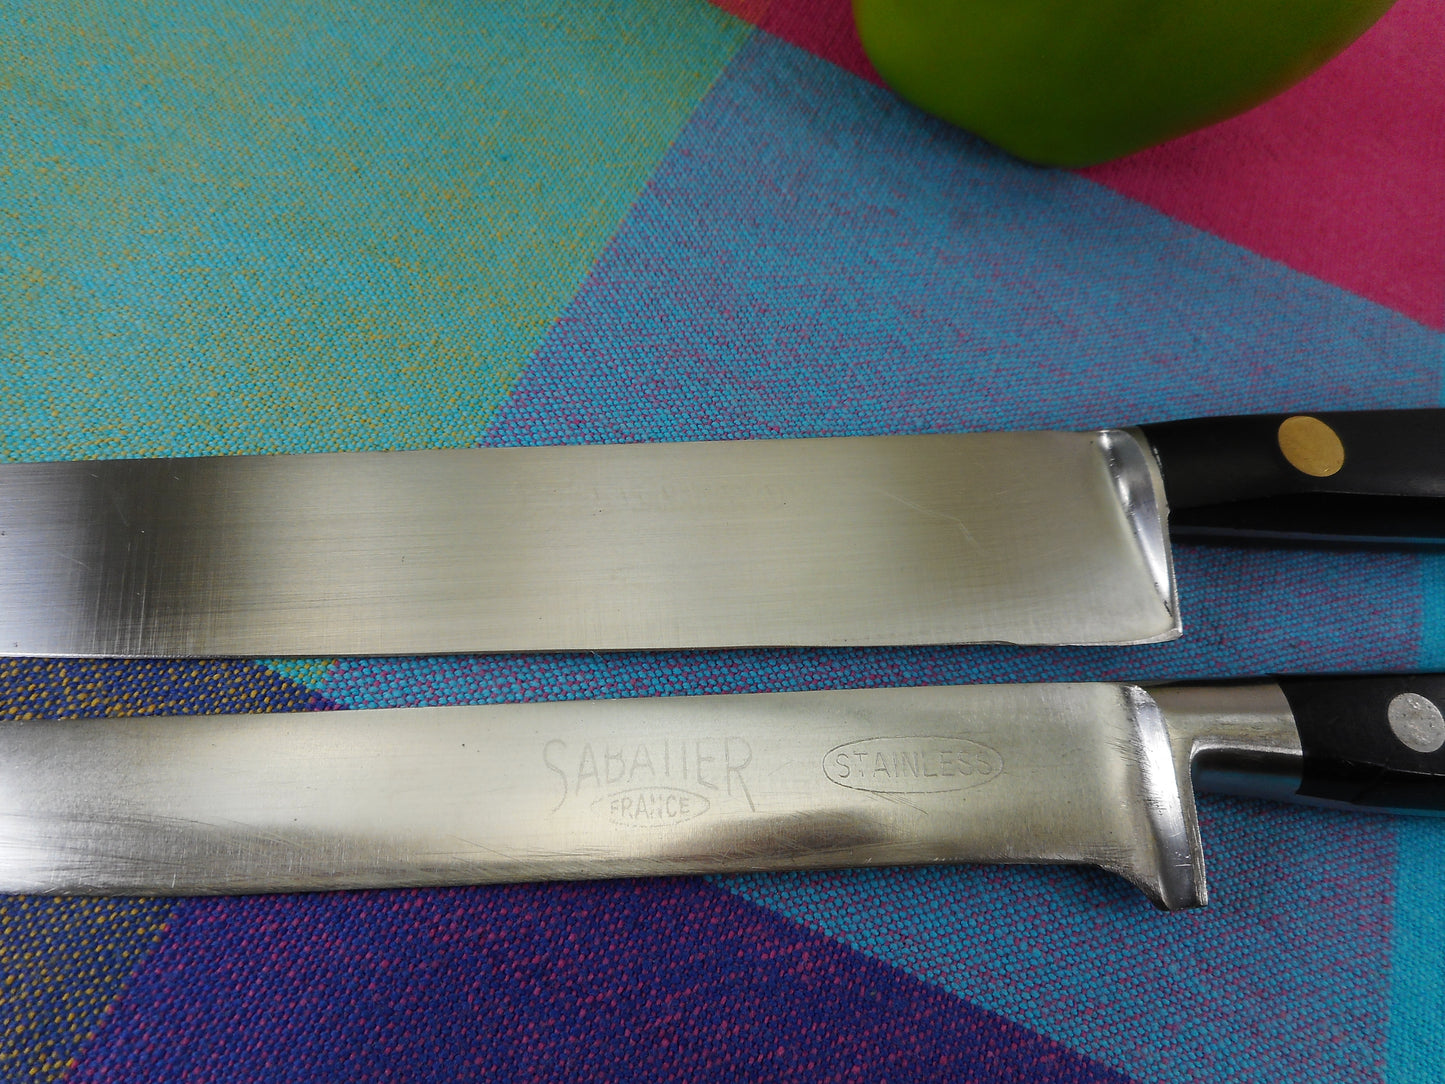 Sabatier France Pair Stainless Kitchen Knives wt Damage - 6" Utility & Lion 7.5" Slicing - scratch